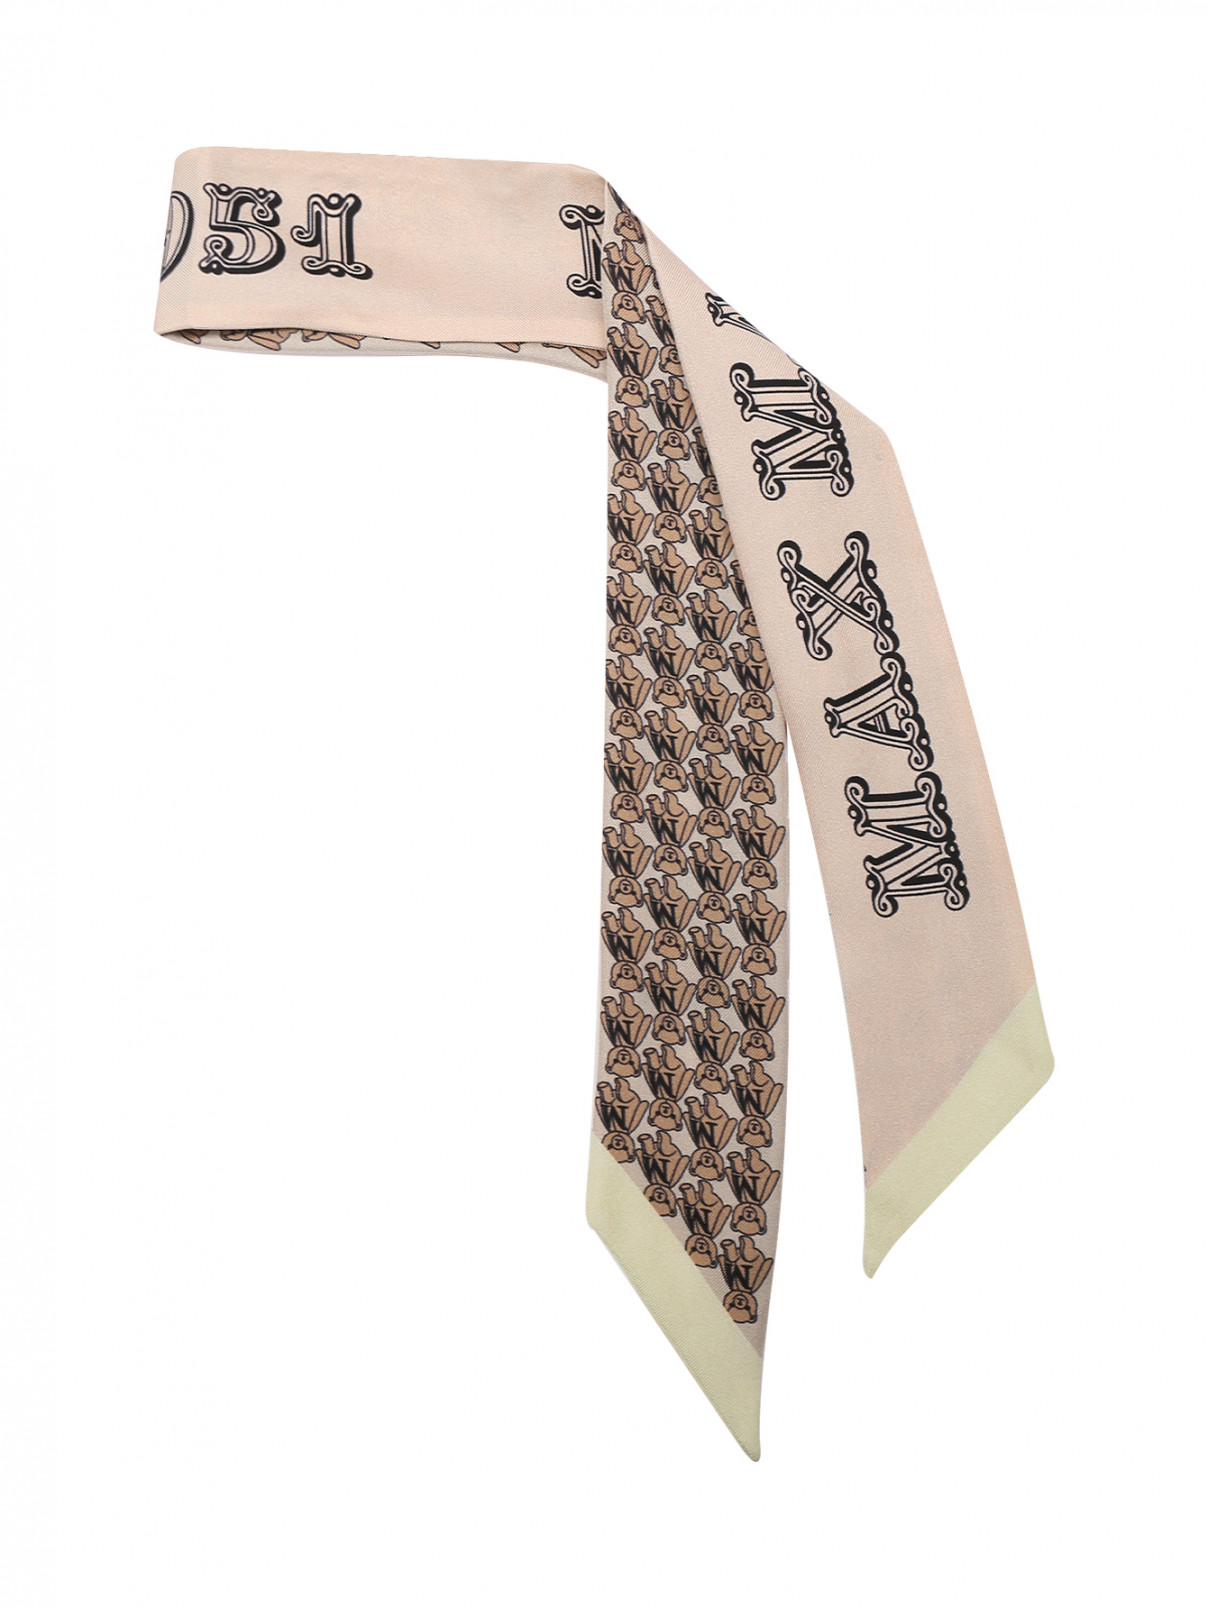 Шарф-галстук из шелка Max Mara  –  Общий вид  – Цвет:  Бежевый